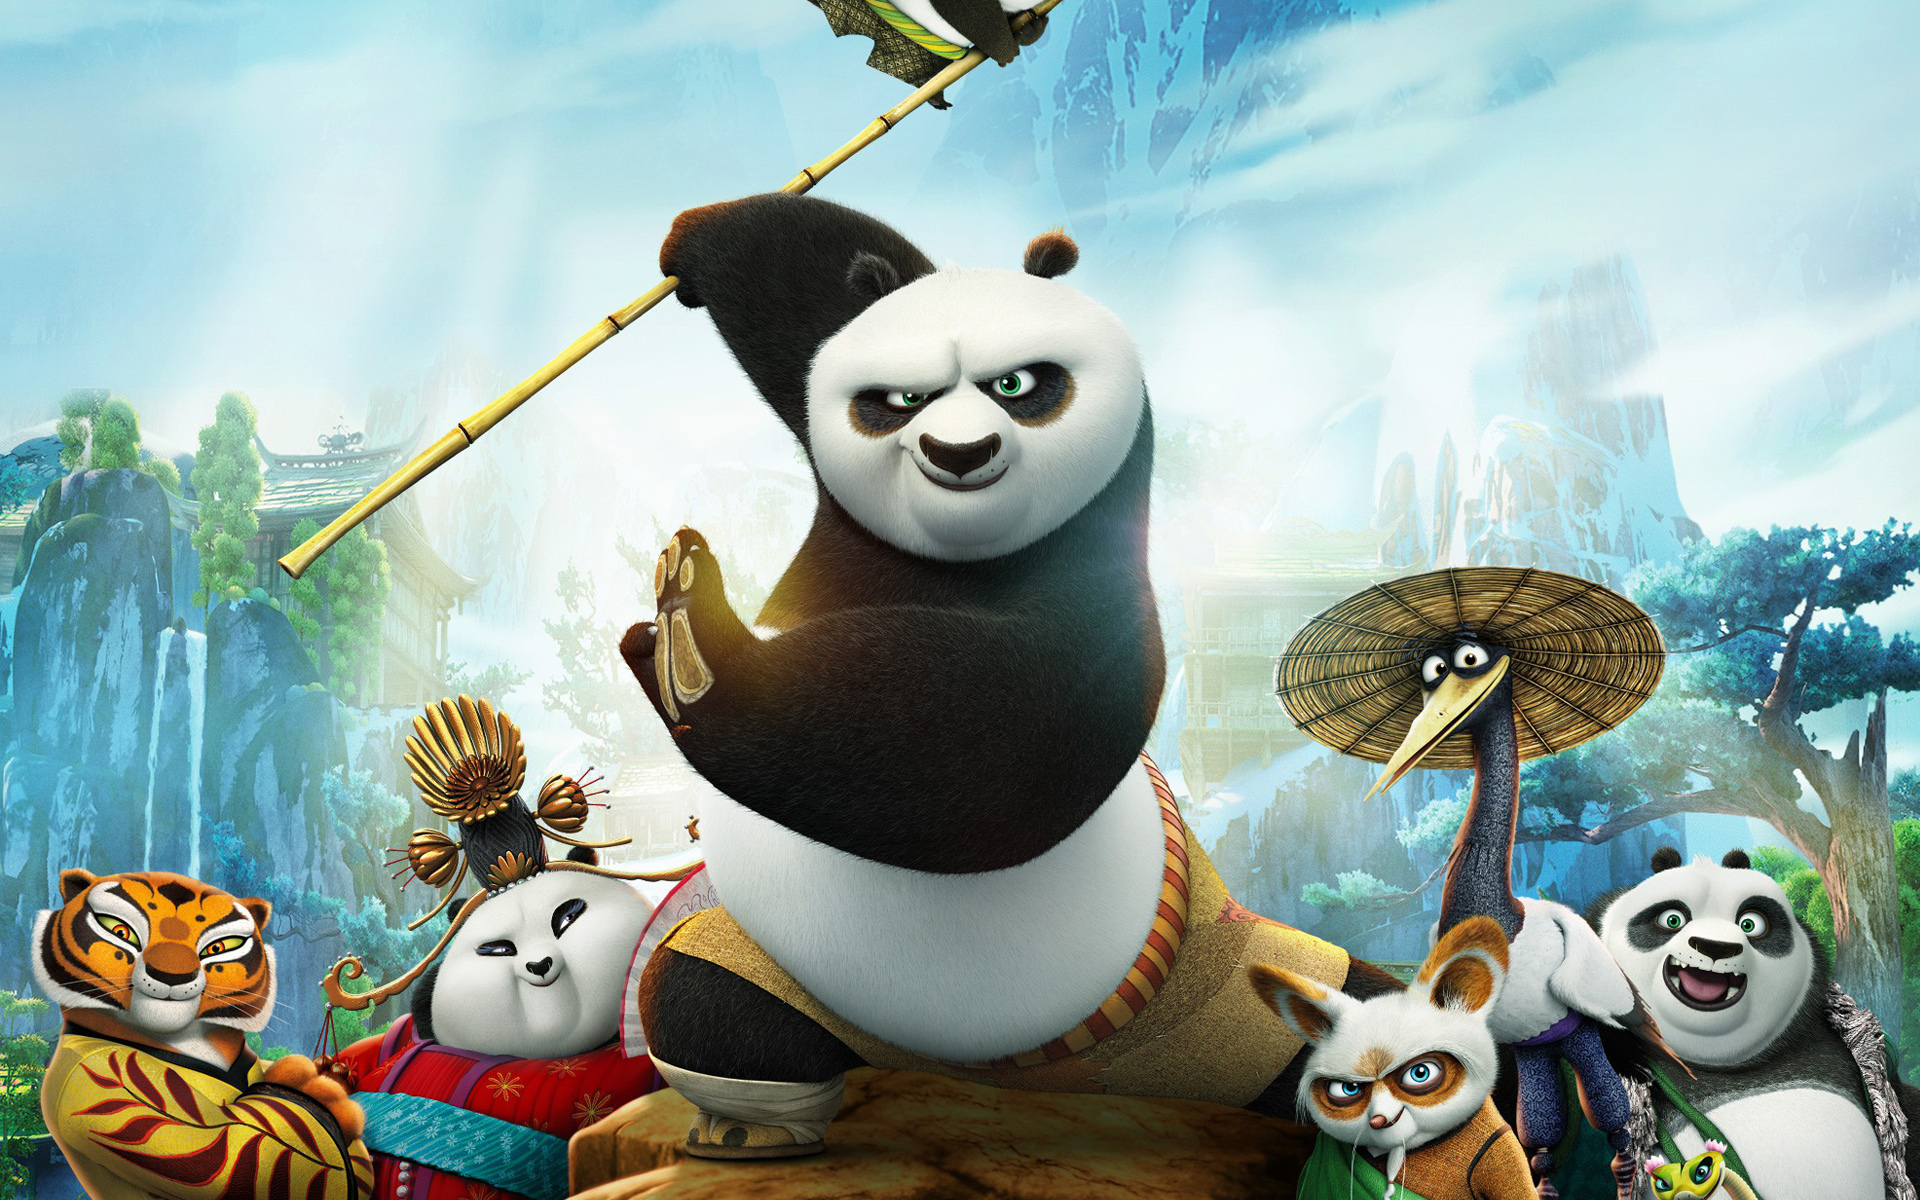 Kung Fu Panda Hd Stream